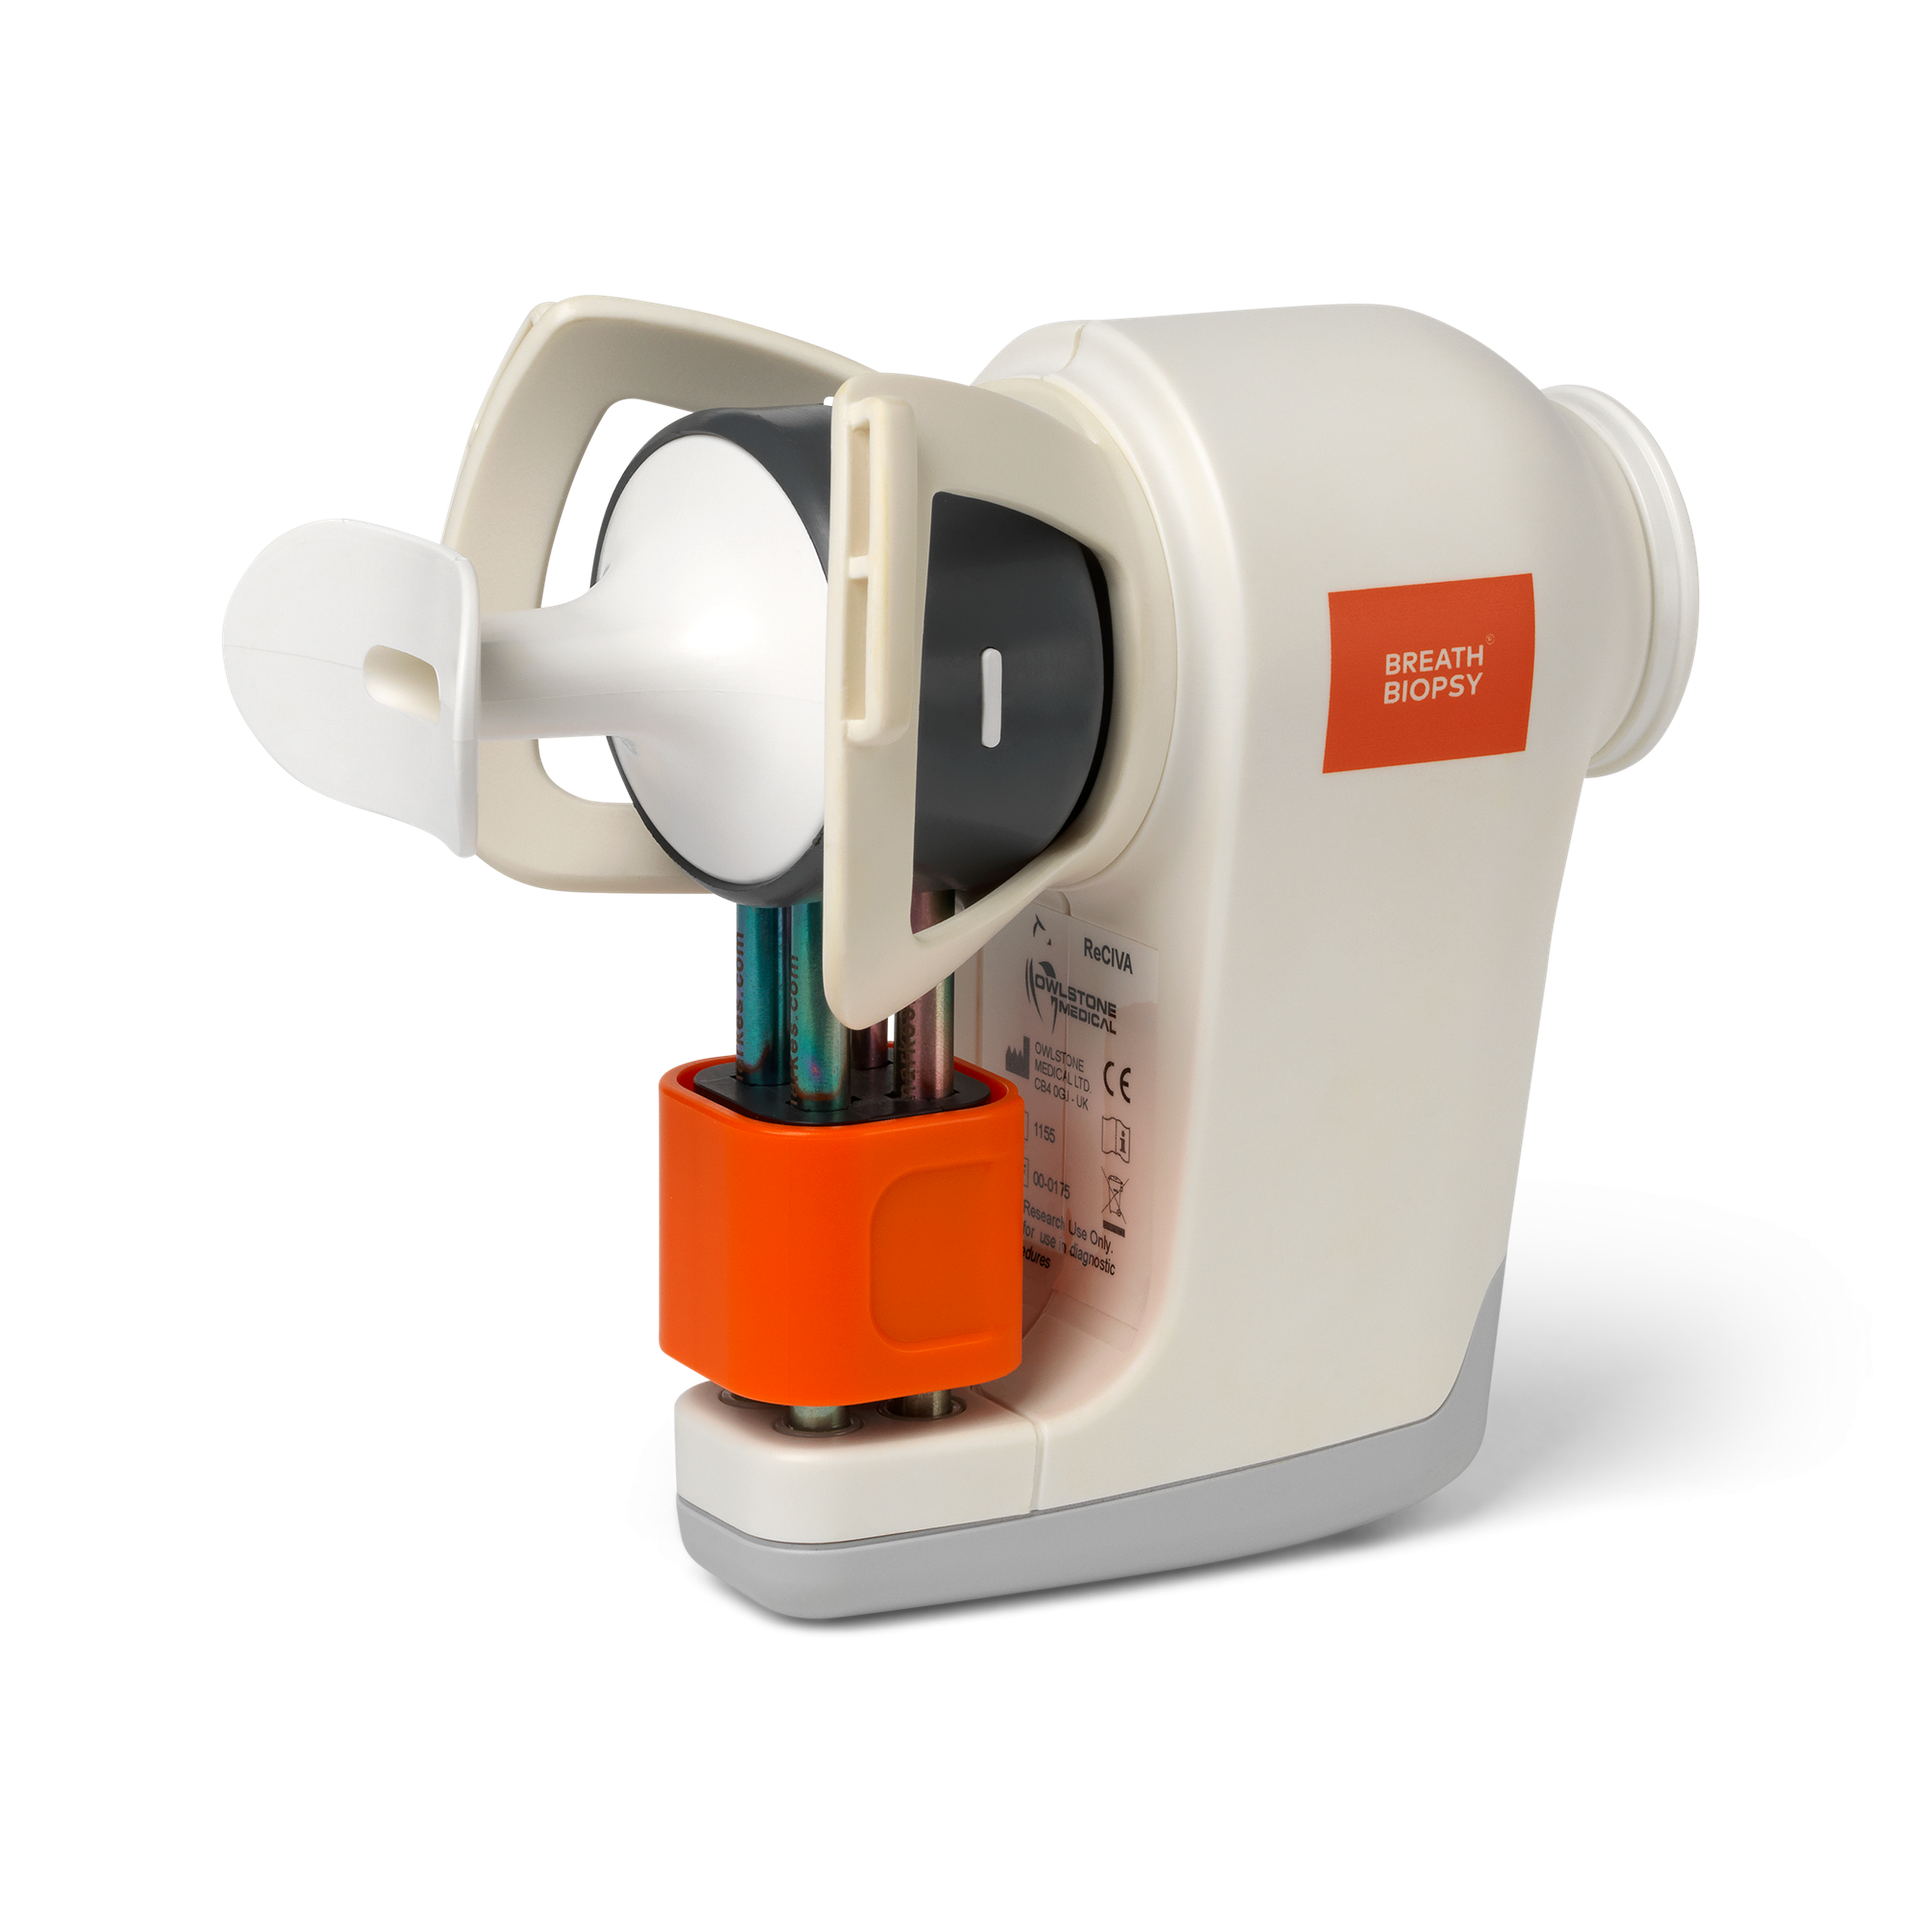 Image of ReCIVA Breath Sampler device